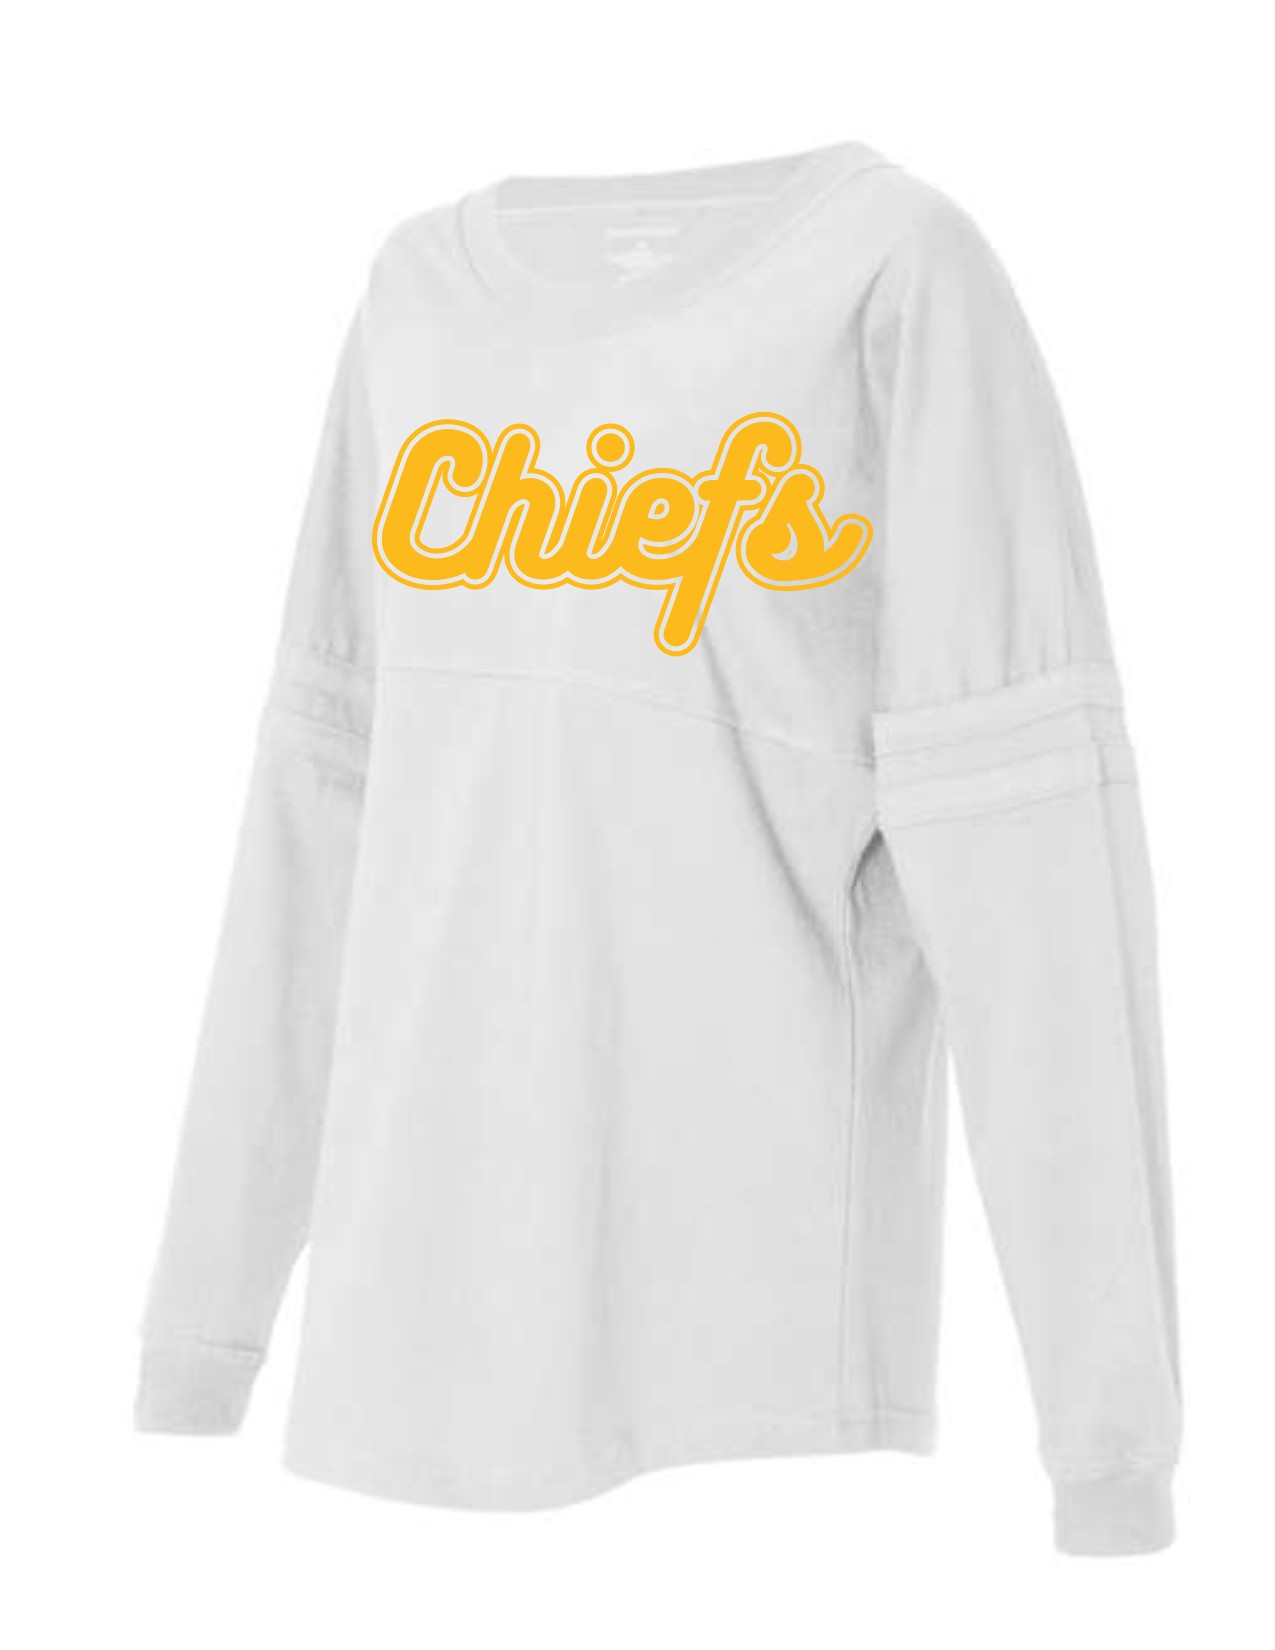 white long sleeve chiefs shirt